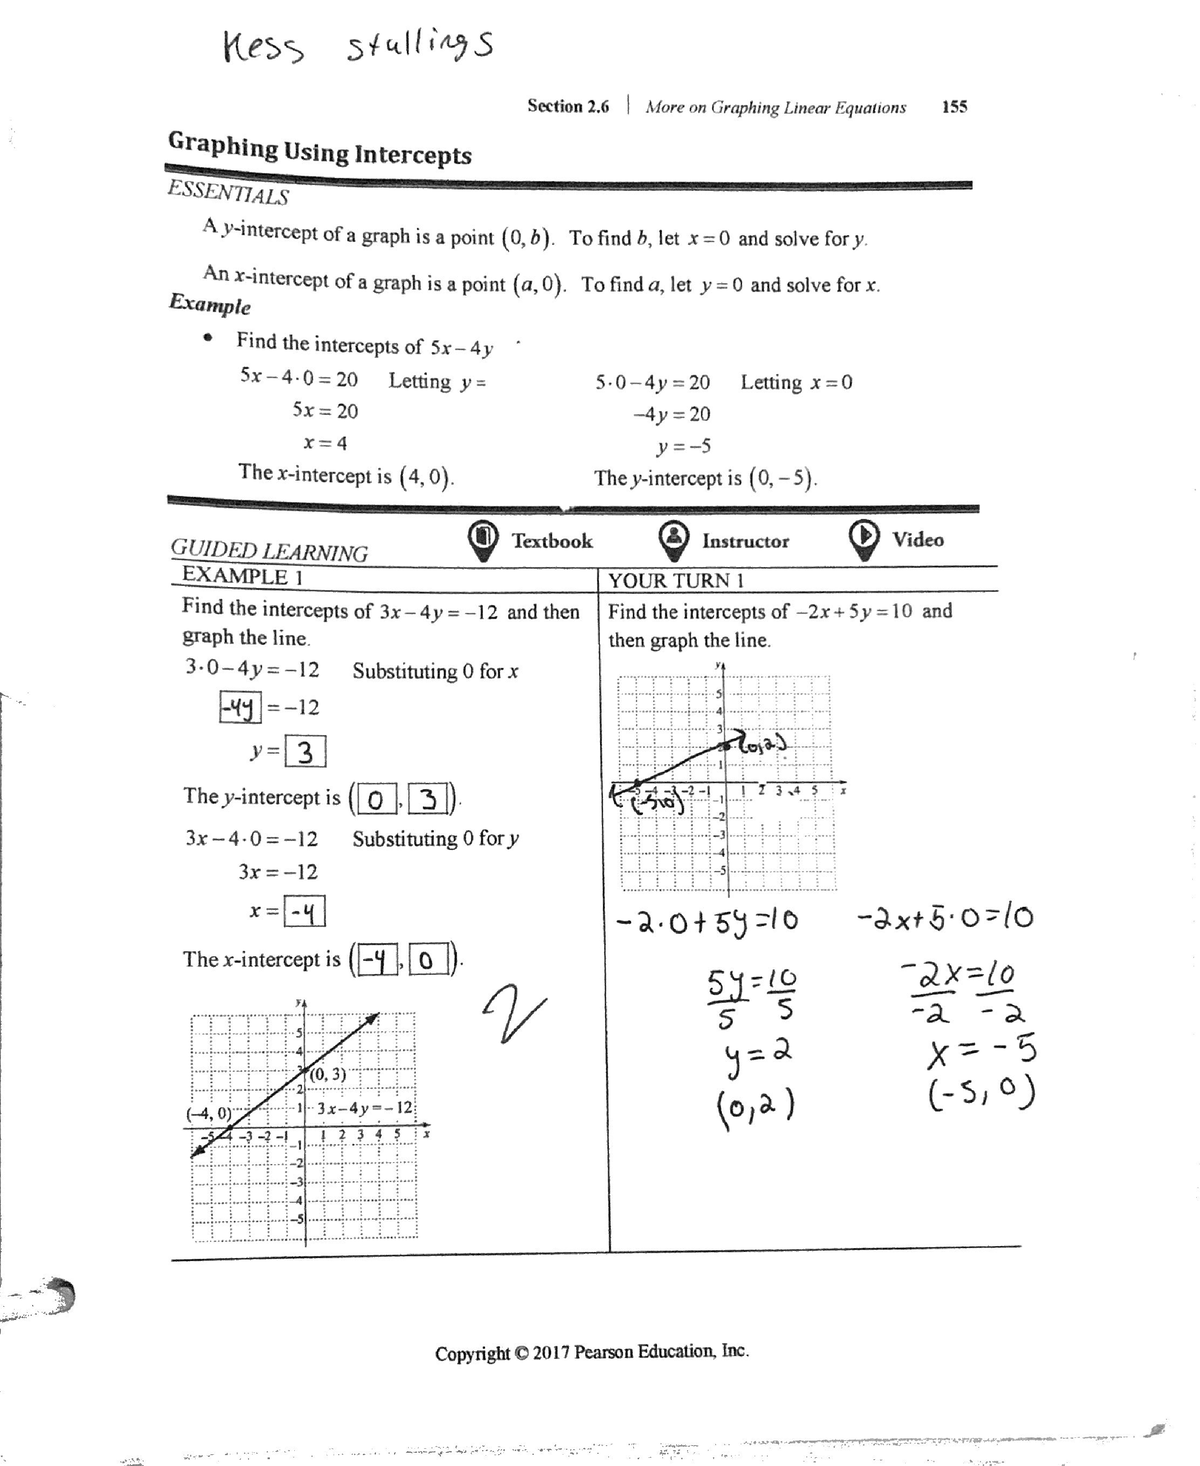 math m coursework